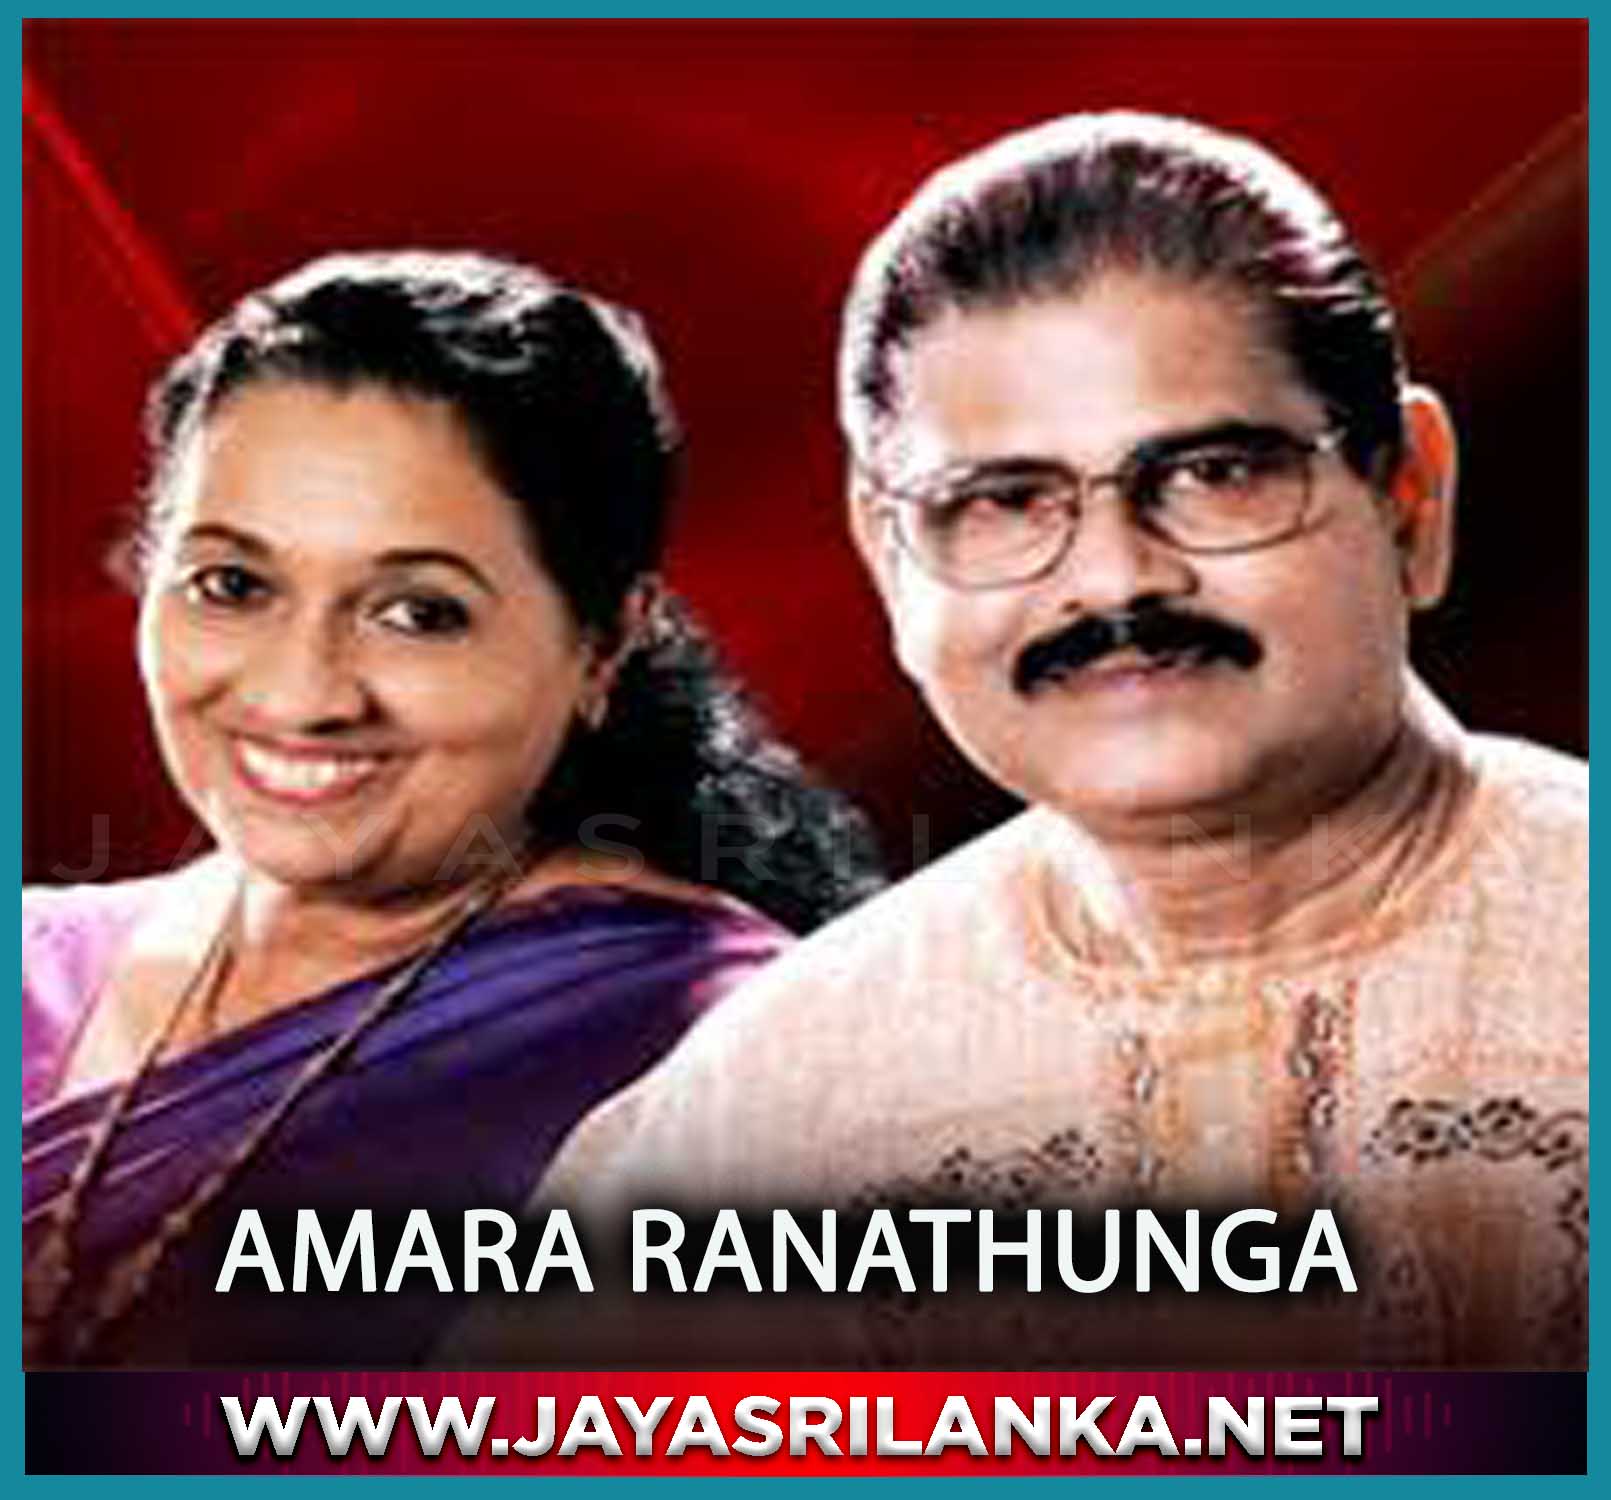 Hada Puda Asunehi - Roopa Indumathi And Amara Ranathunga mp3 Image